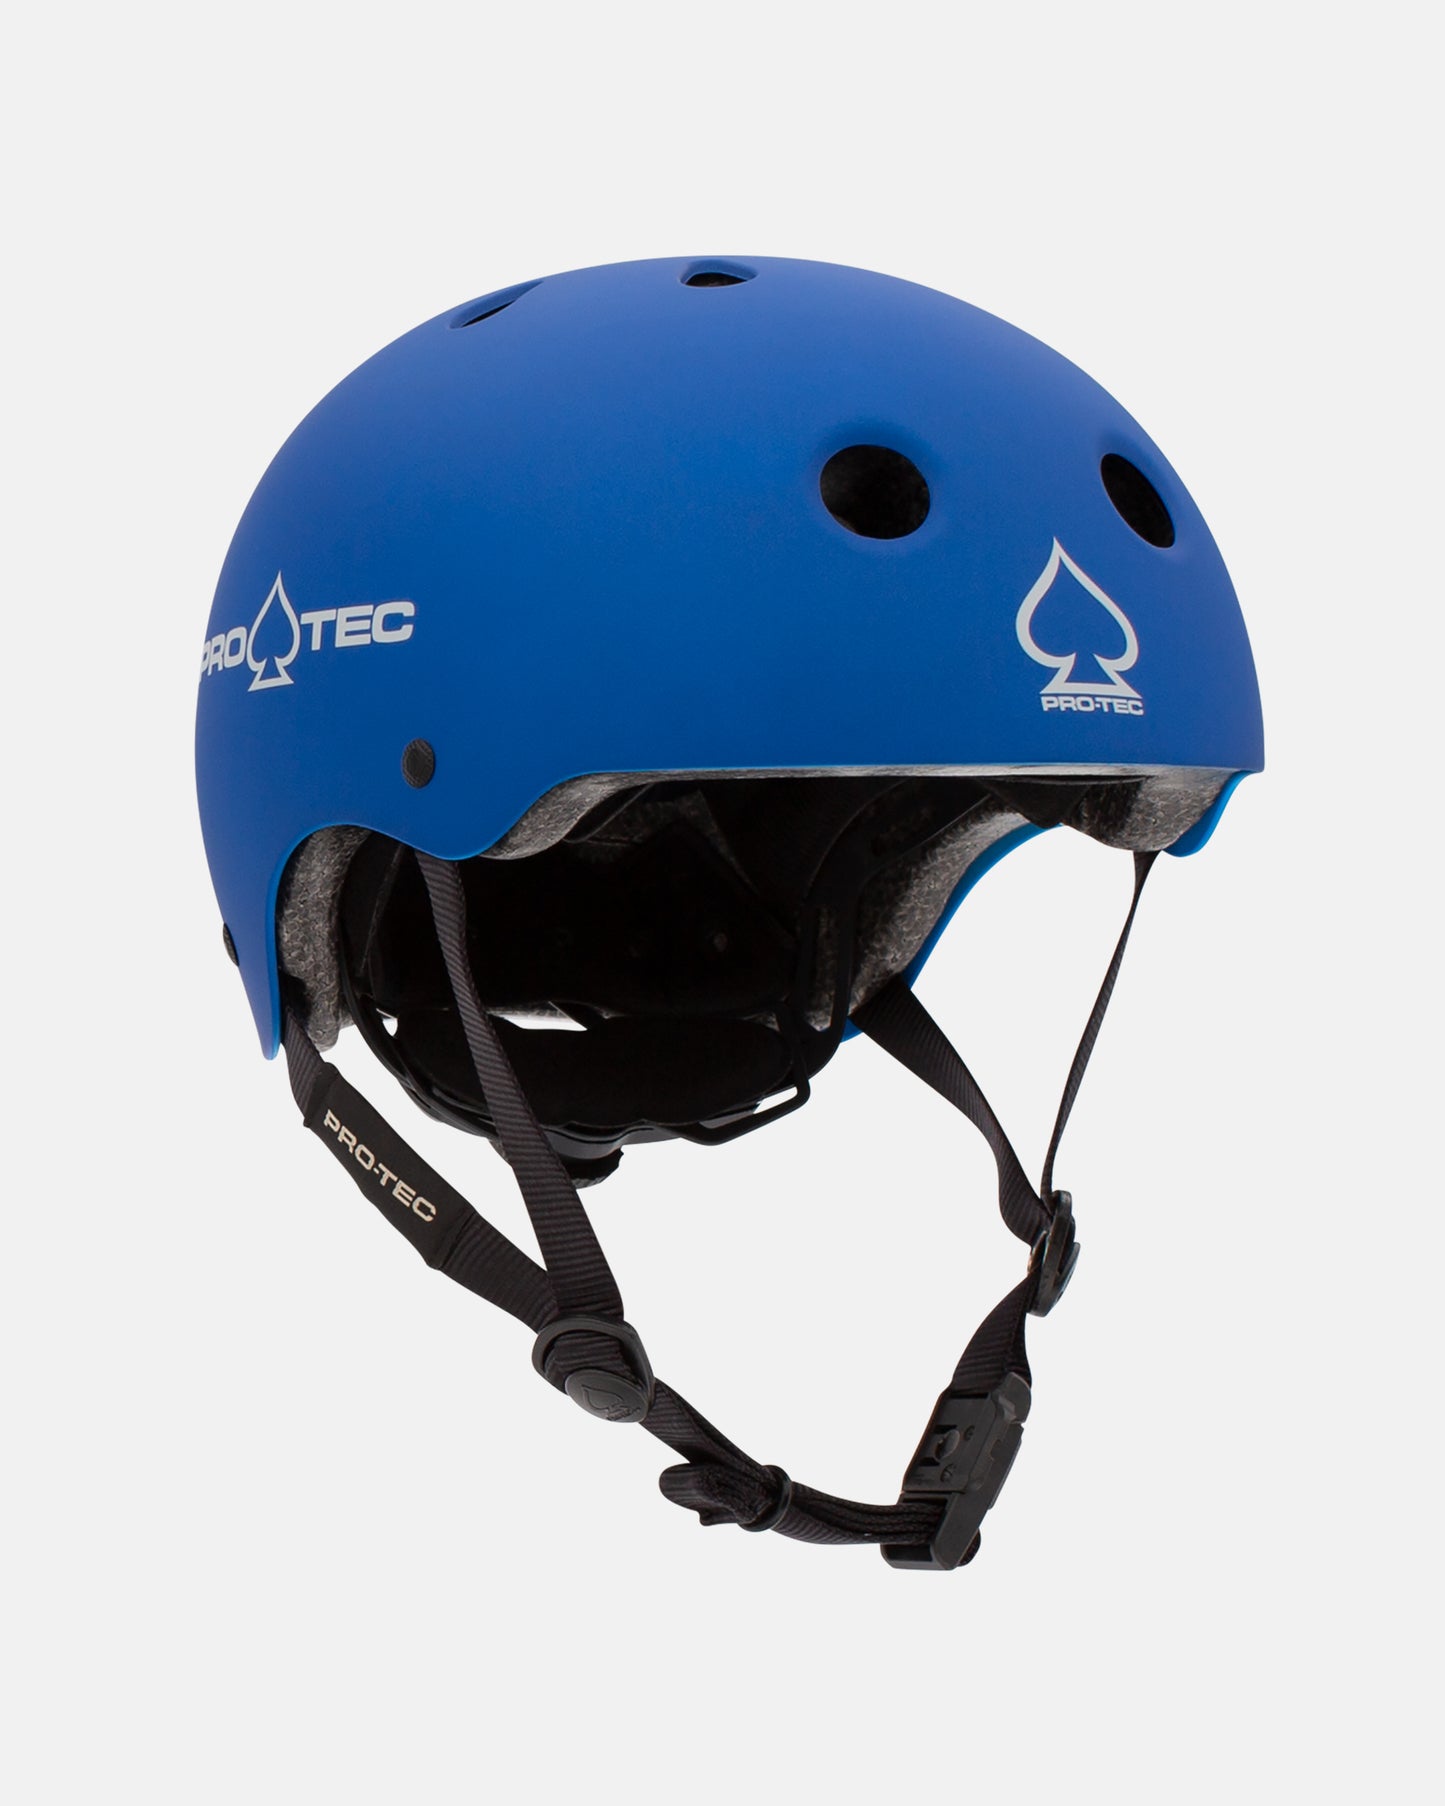 Protec Junior Classic Fit Helmet (Certified) - Metallic Blue - Impala Rollerskates